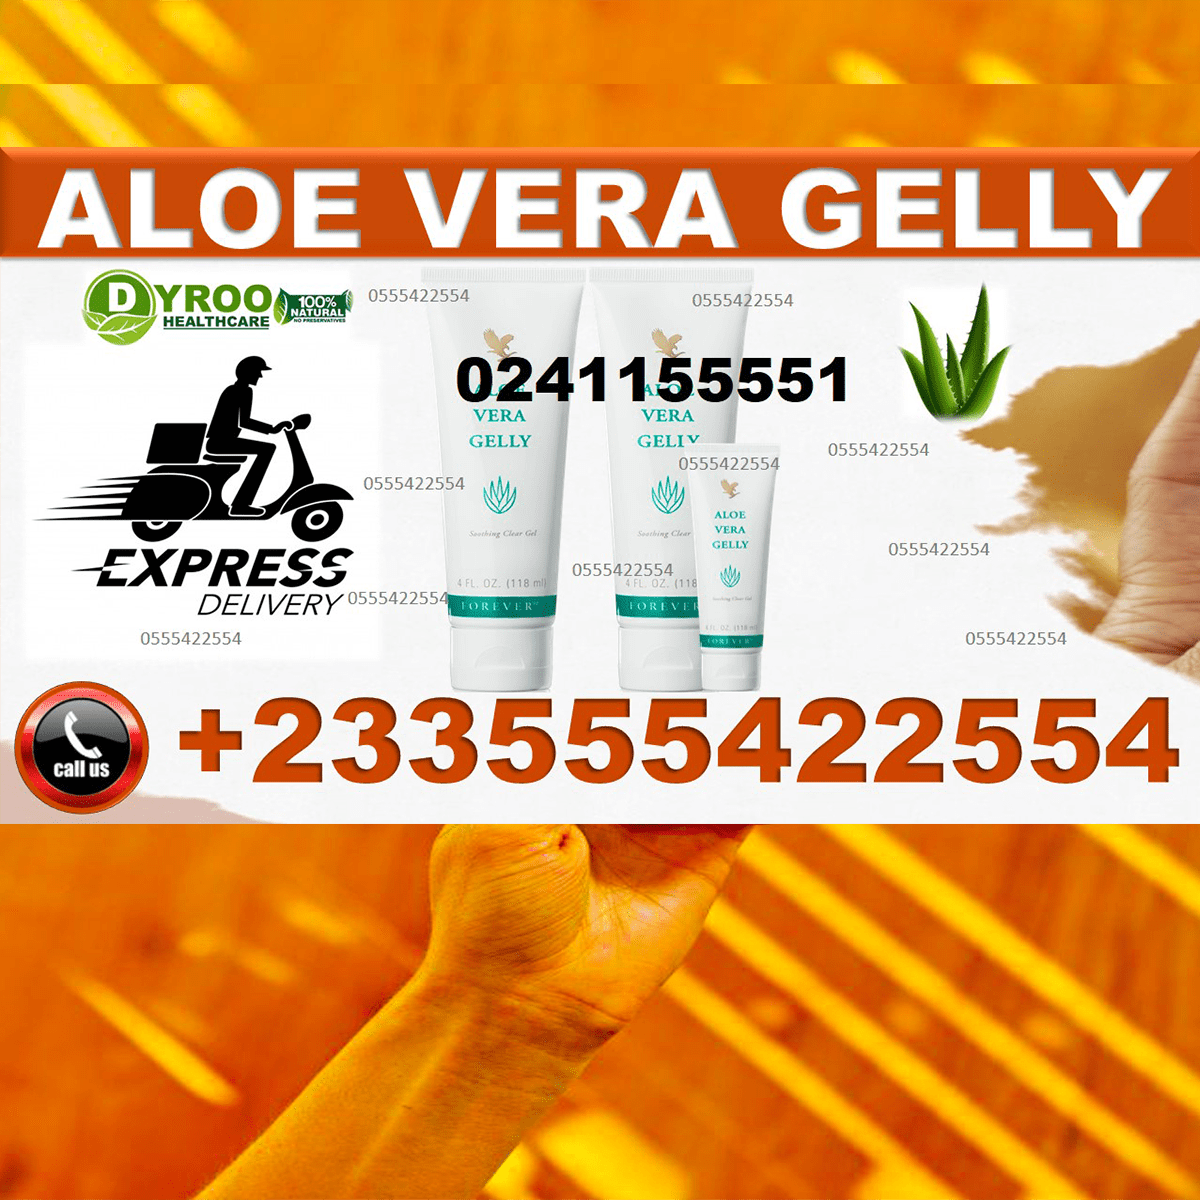 Aloe Vera Gelly in Ghana